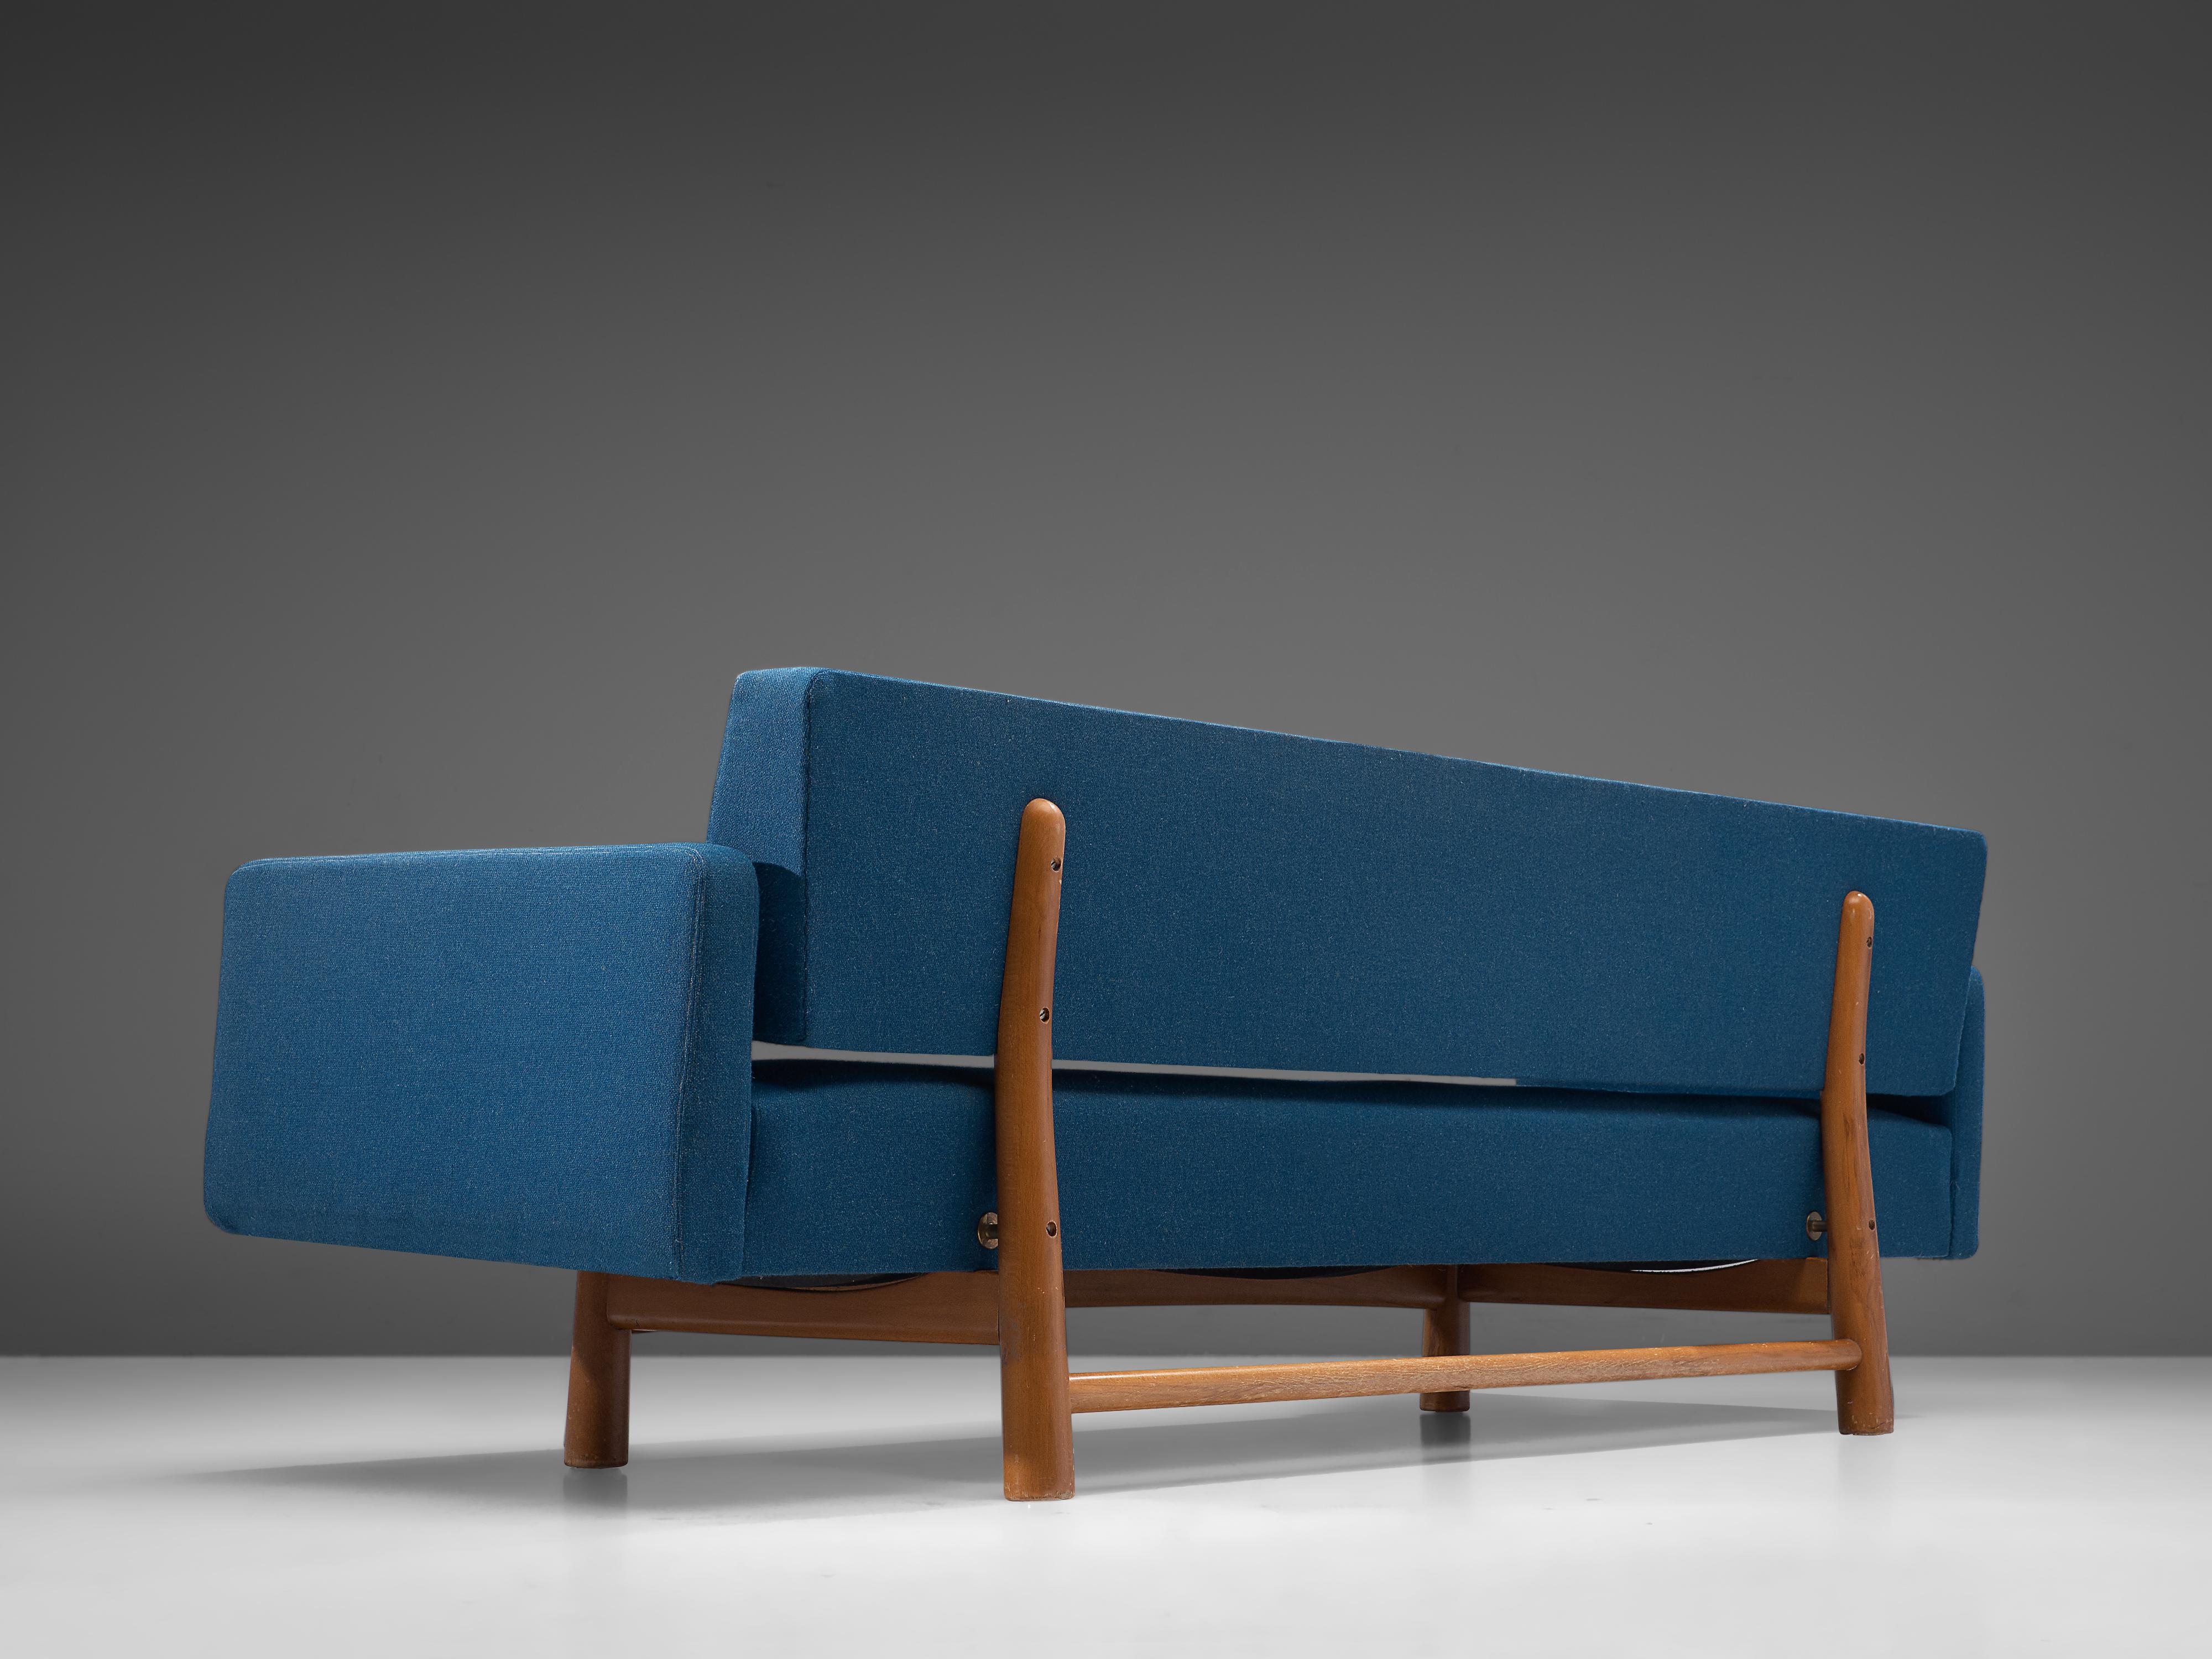 Mid-20th Century Edward Wormley for Dunbar Sofa 5316 in Blue Fabric Upholstery